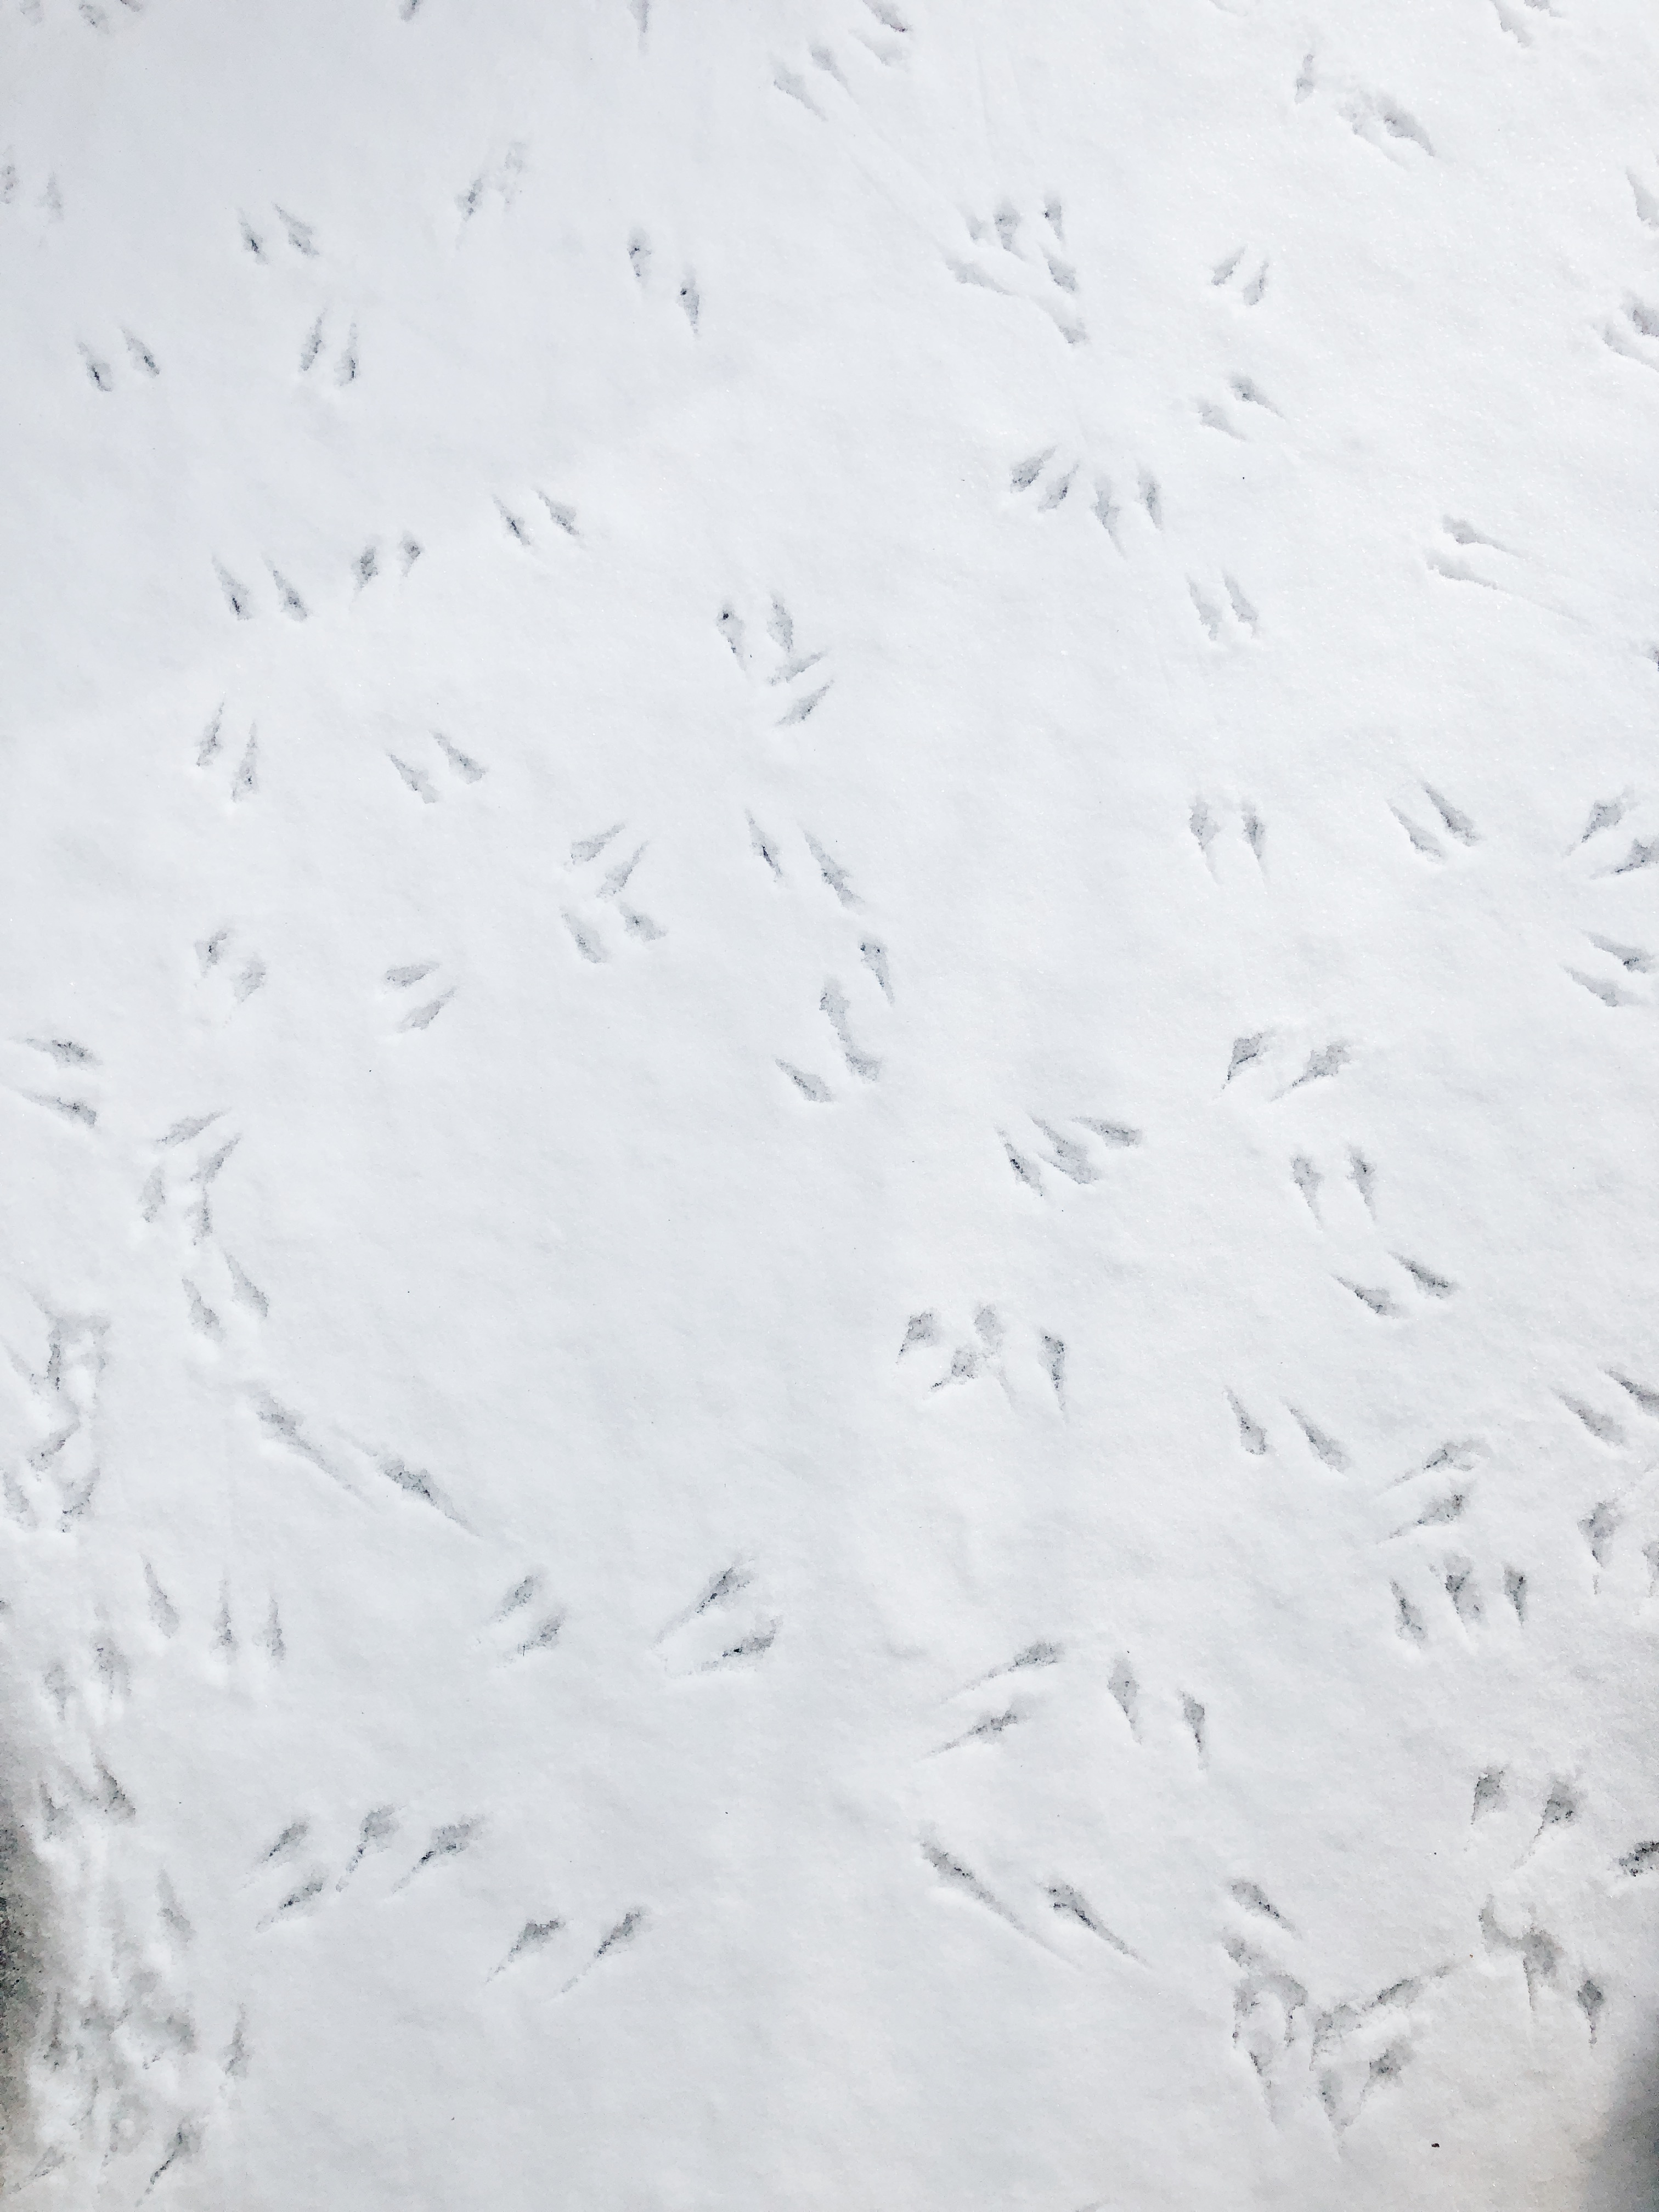 bird tracks in the snow